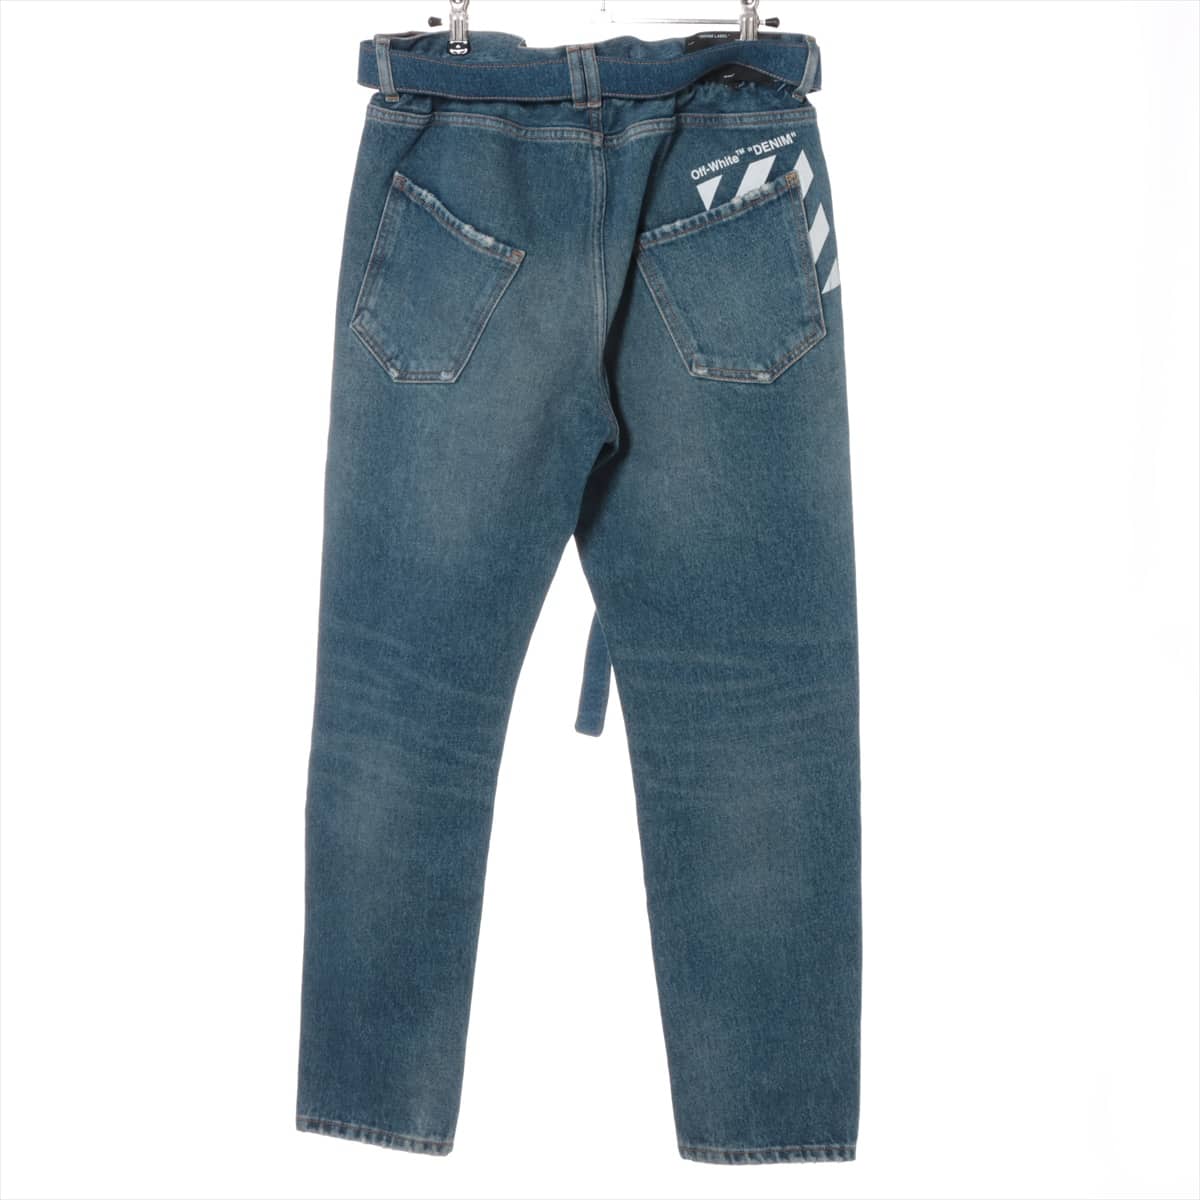 Off-White Cotton Denim pants 31 Men's Blue  OMYA005S19386025